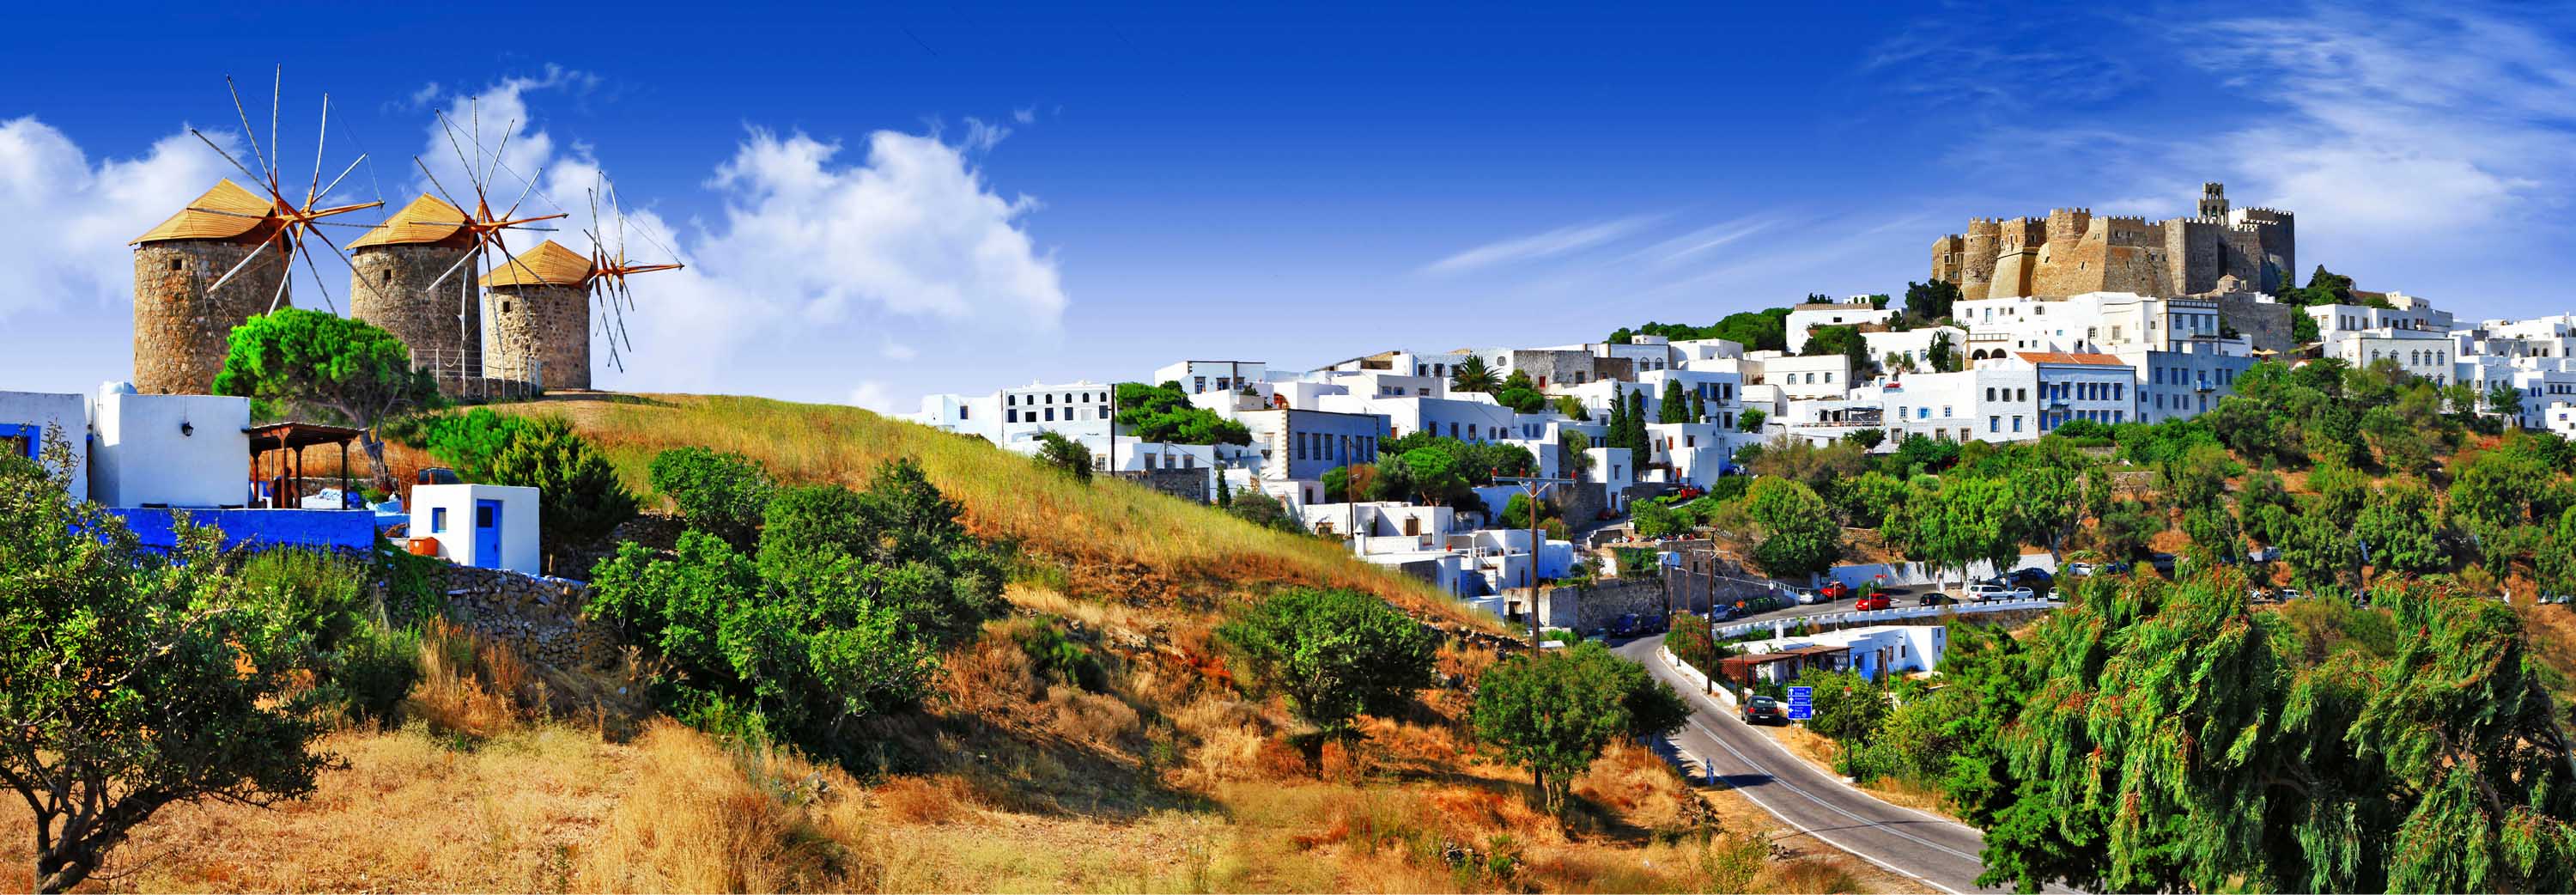  Patmos, Greece